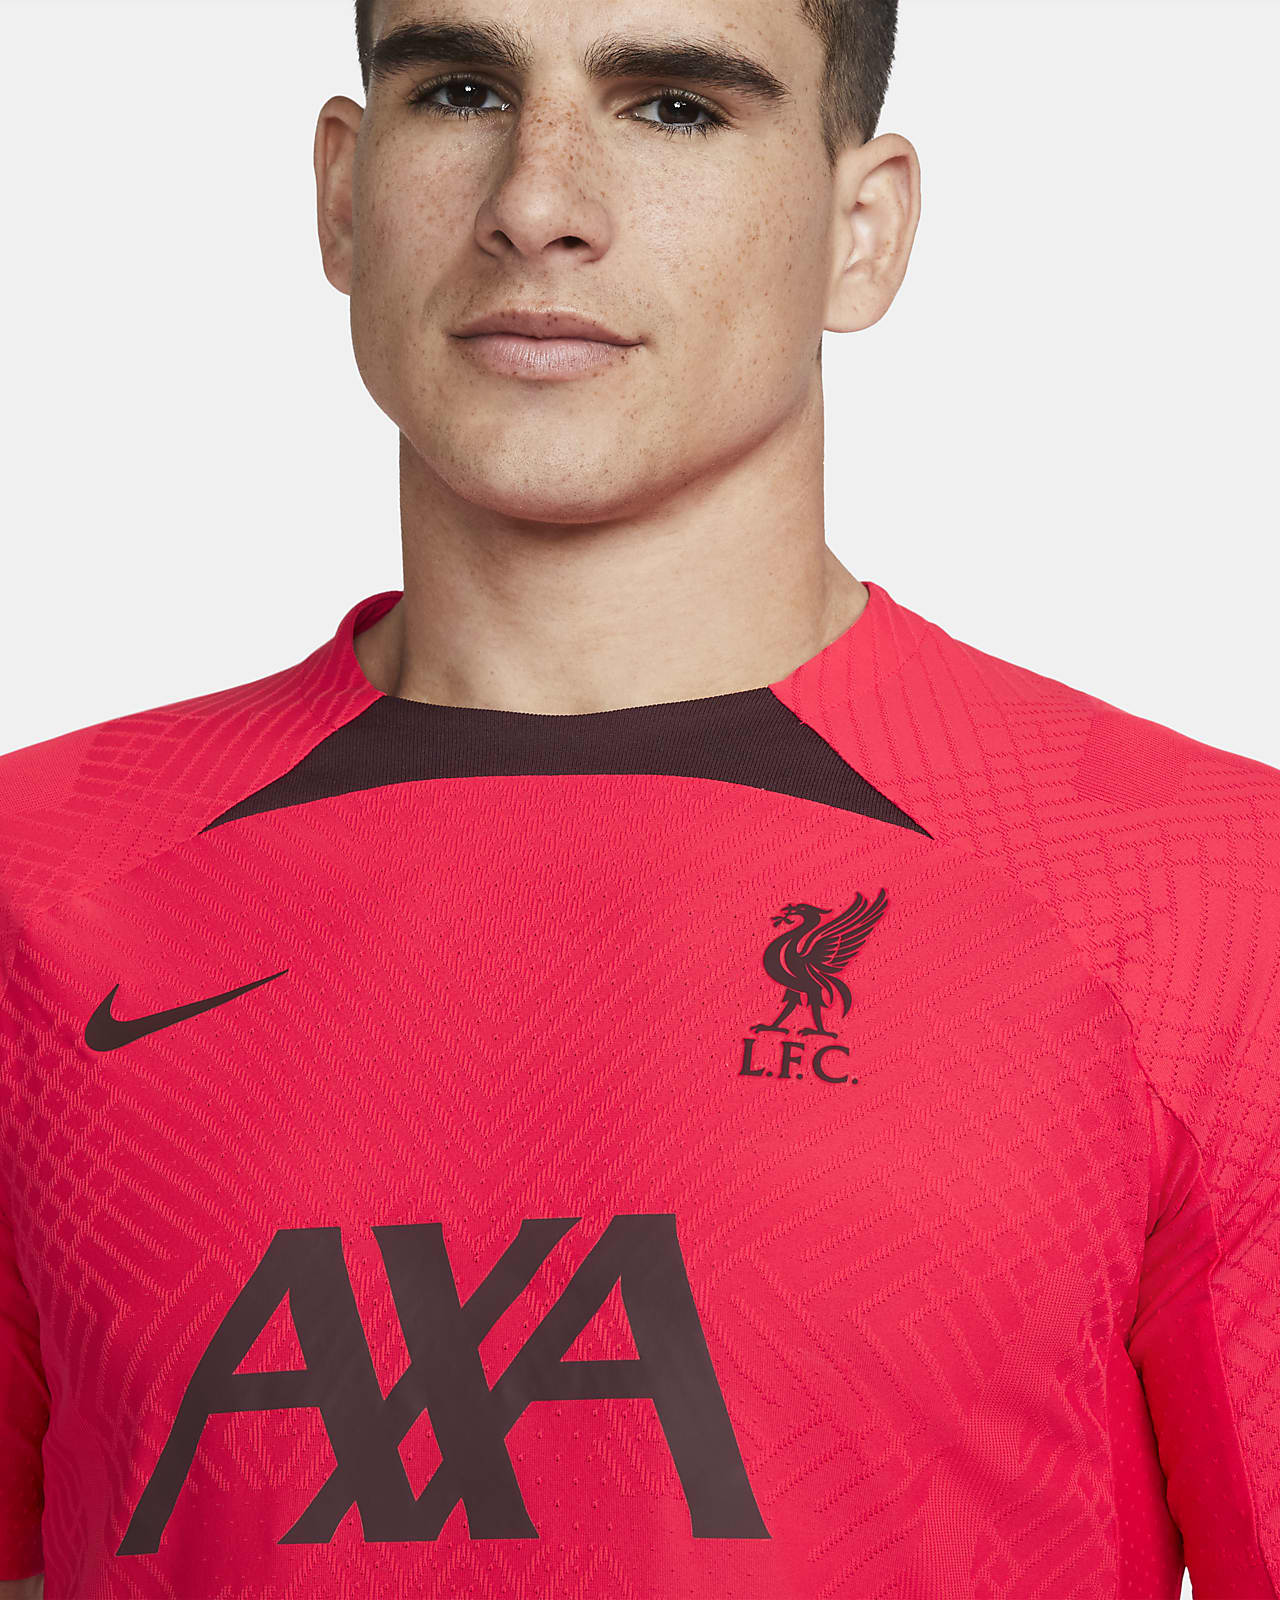 Liverpool FC Strike Elite Men's Nike Dri-FIT ADV Short-Sleeve Soccer Top.